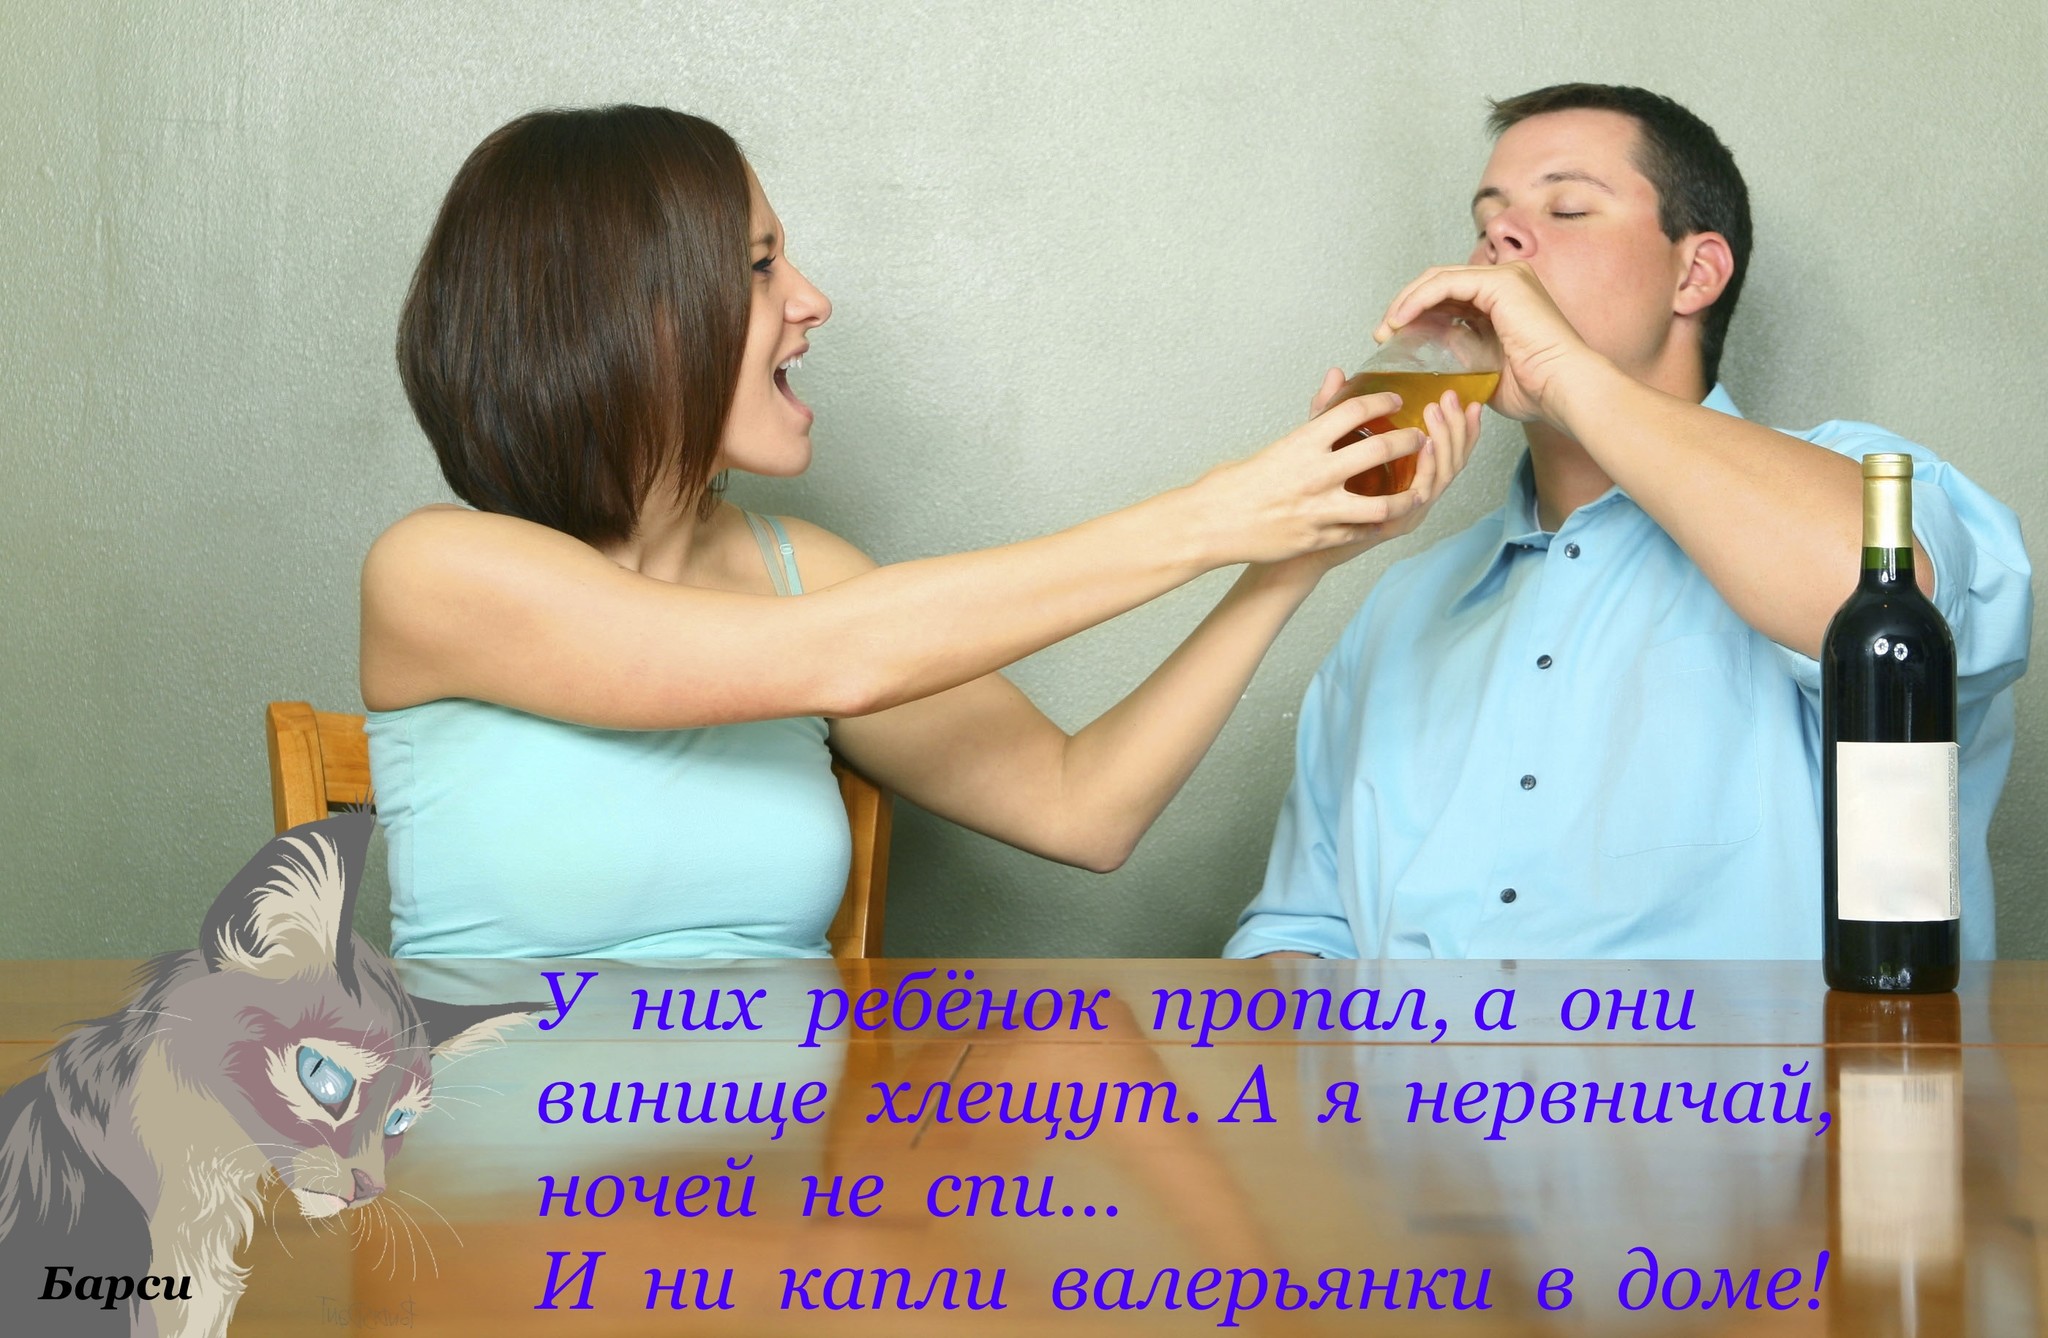 Русская жена напоила мужа. Муж пьет. Муж алкоголик. Муж бь. Пьющий муж.